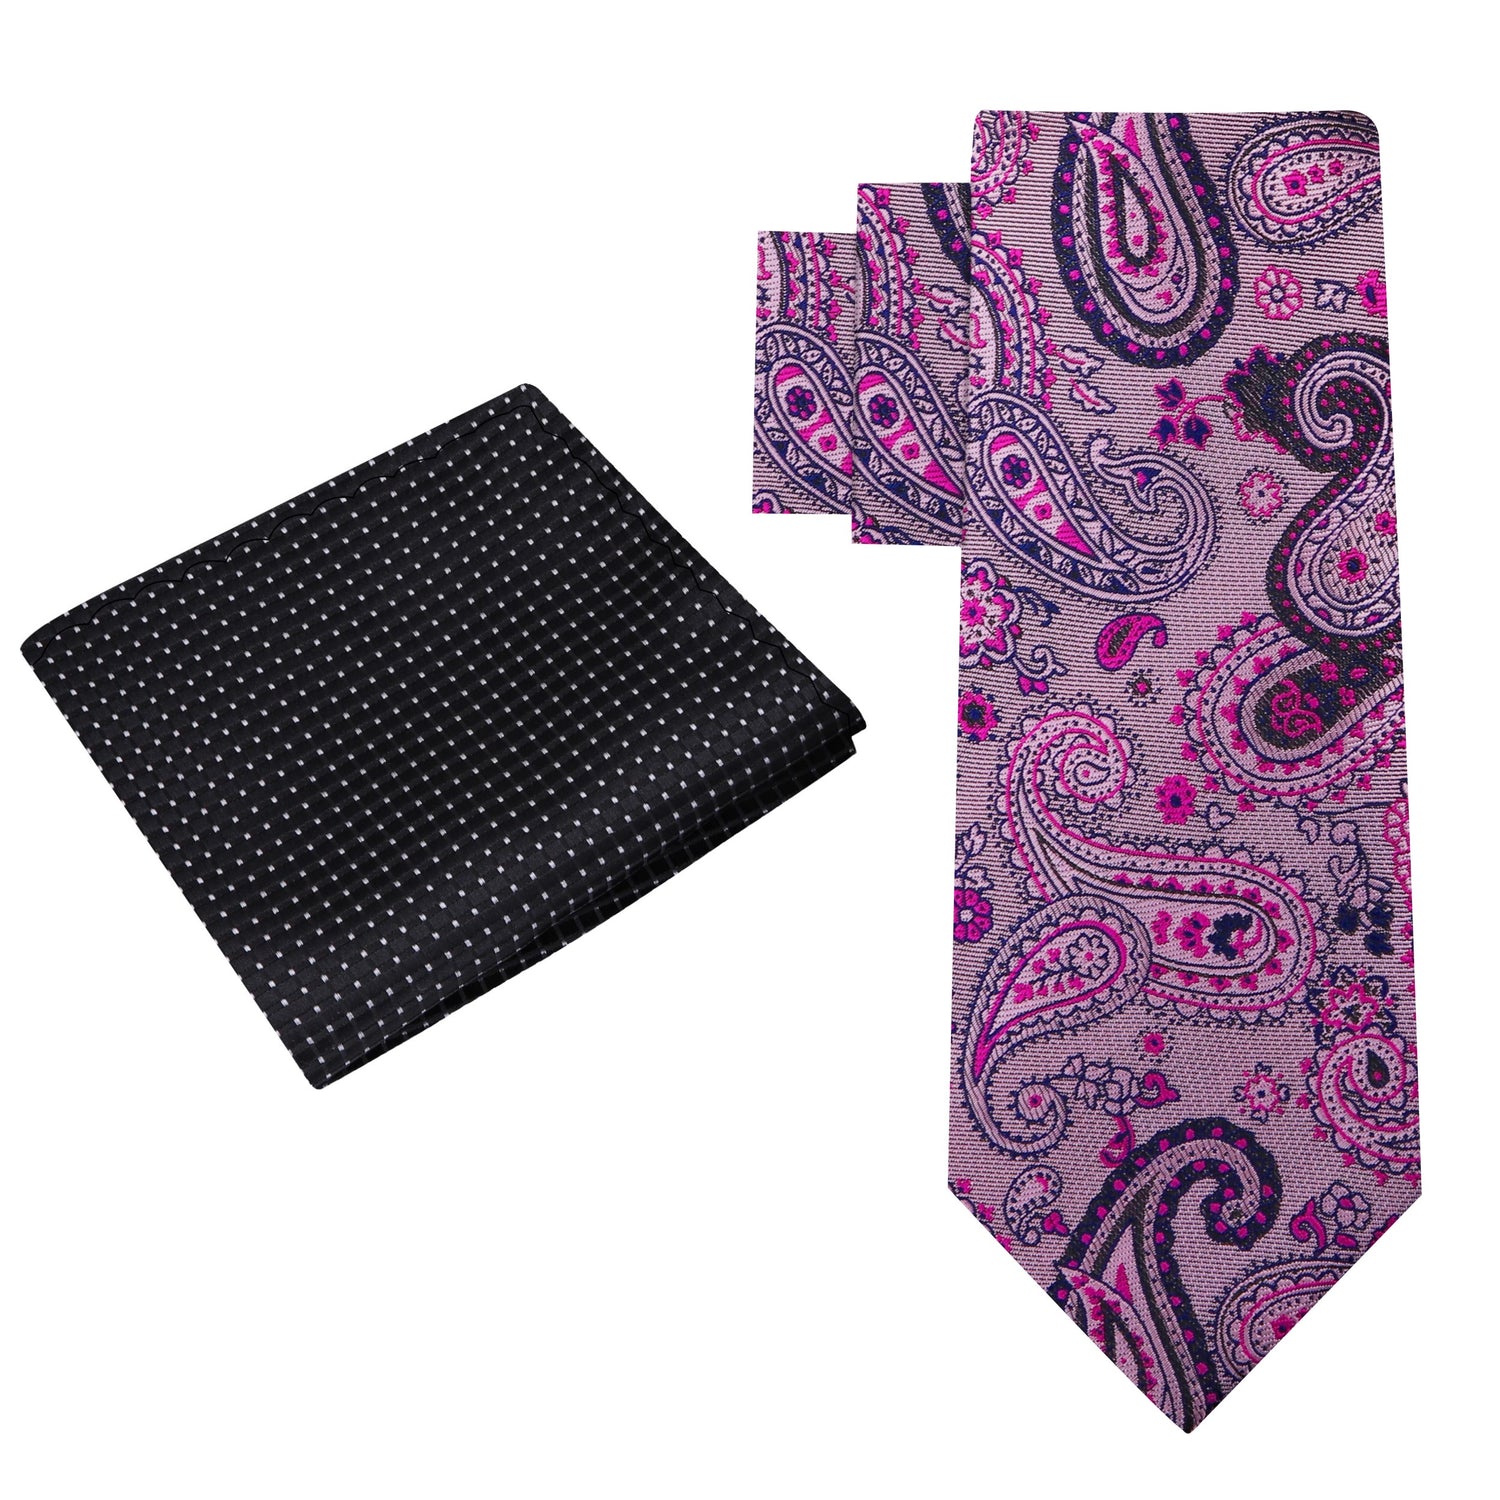 Alt View; Pink, Black Paisley Necktie with Black Square